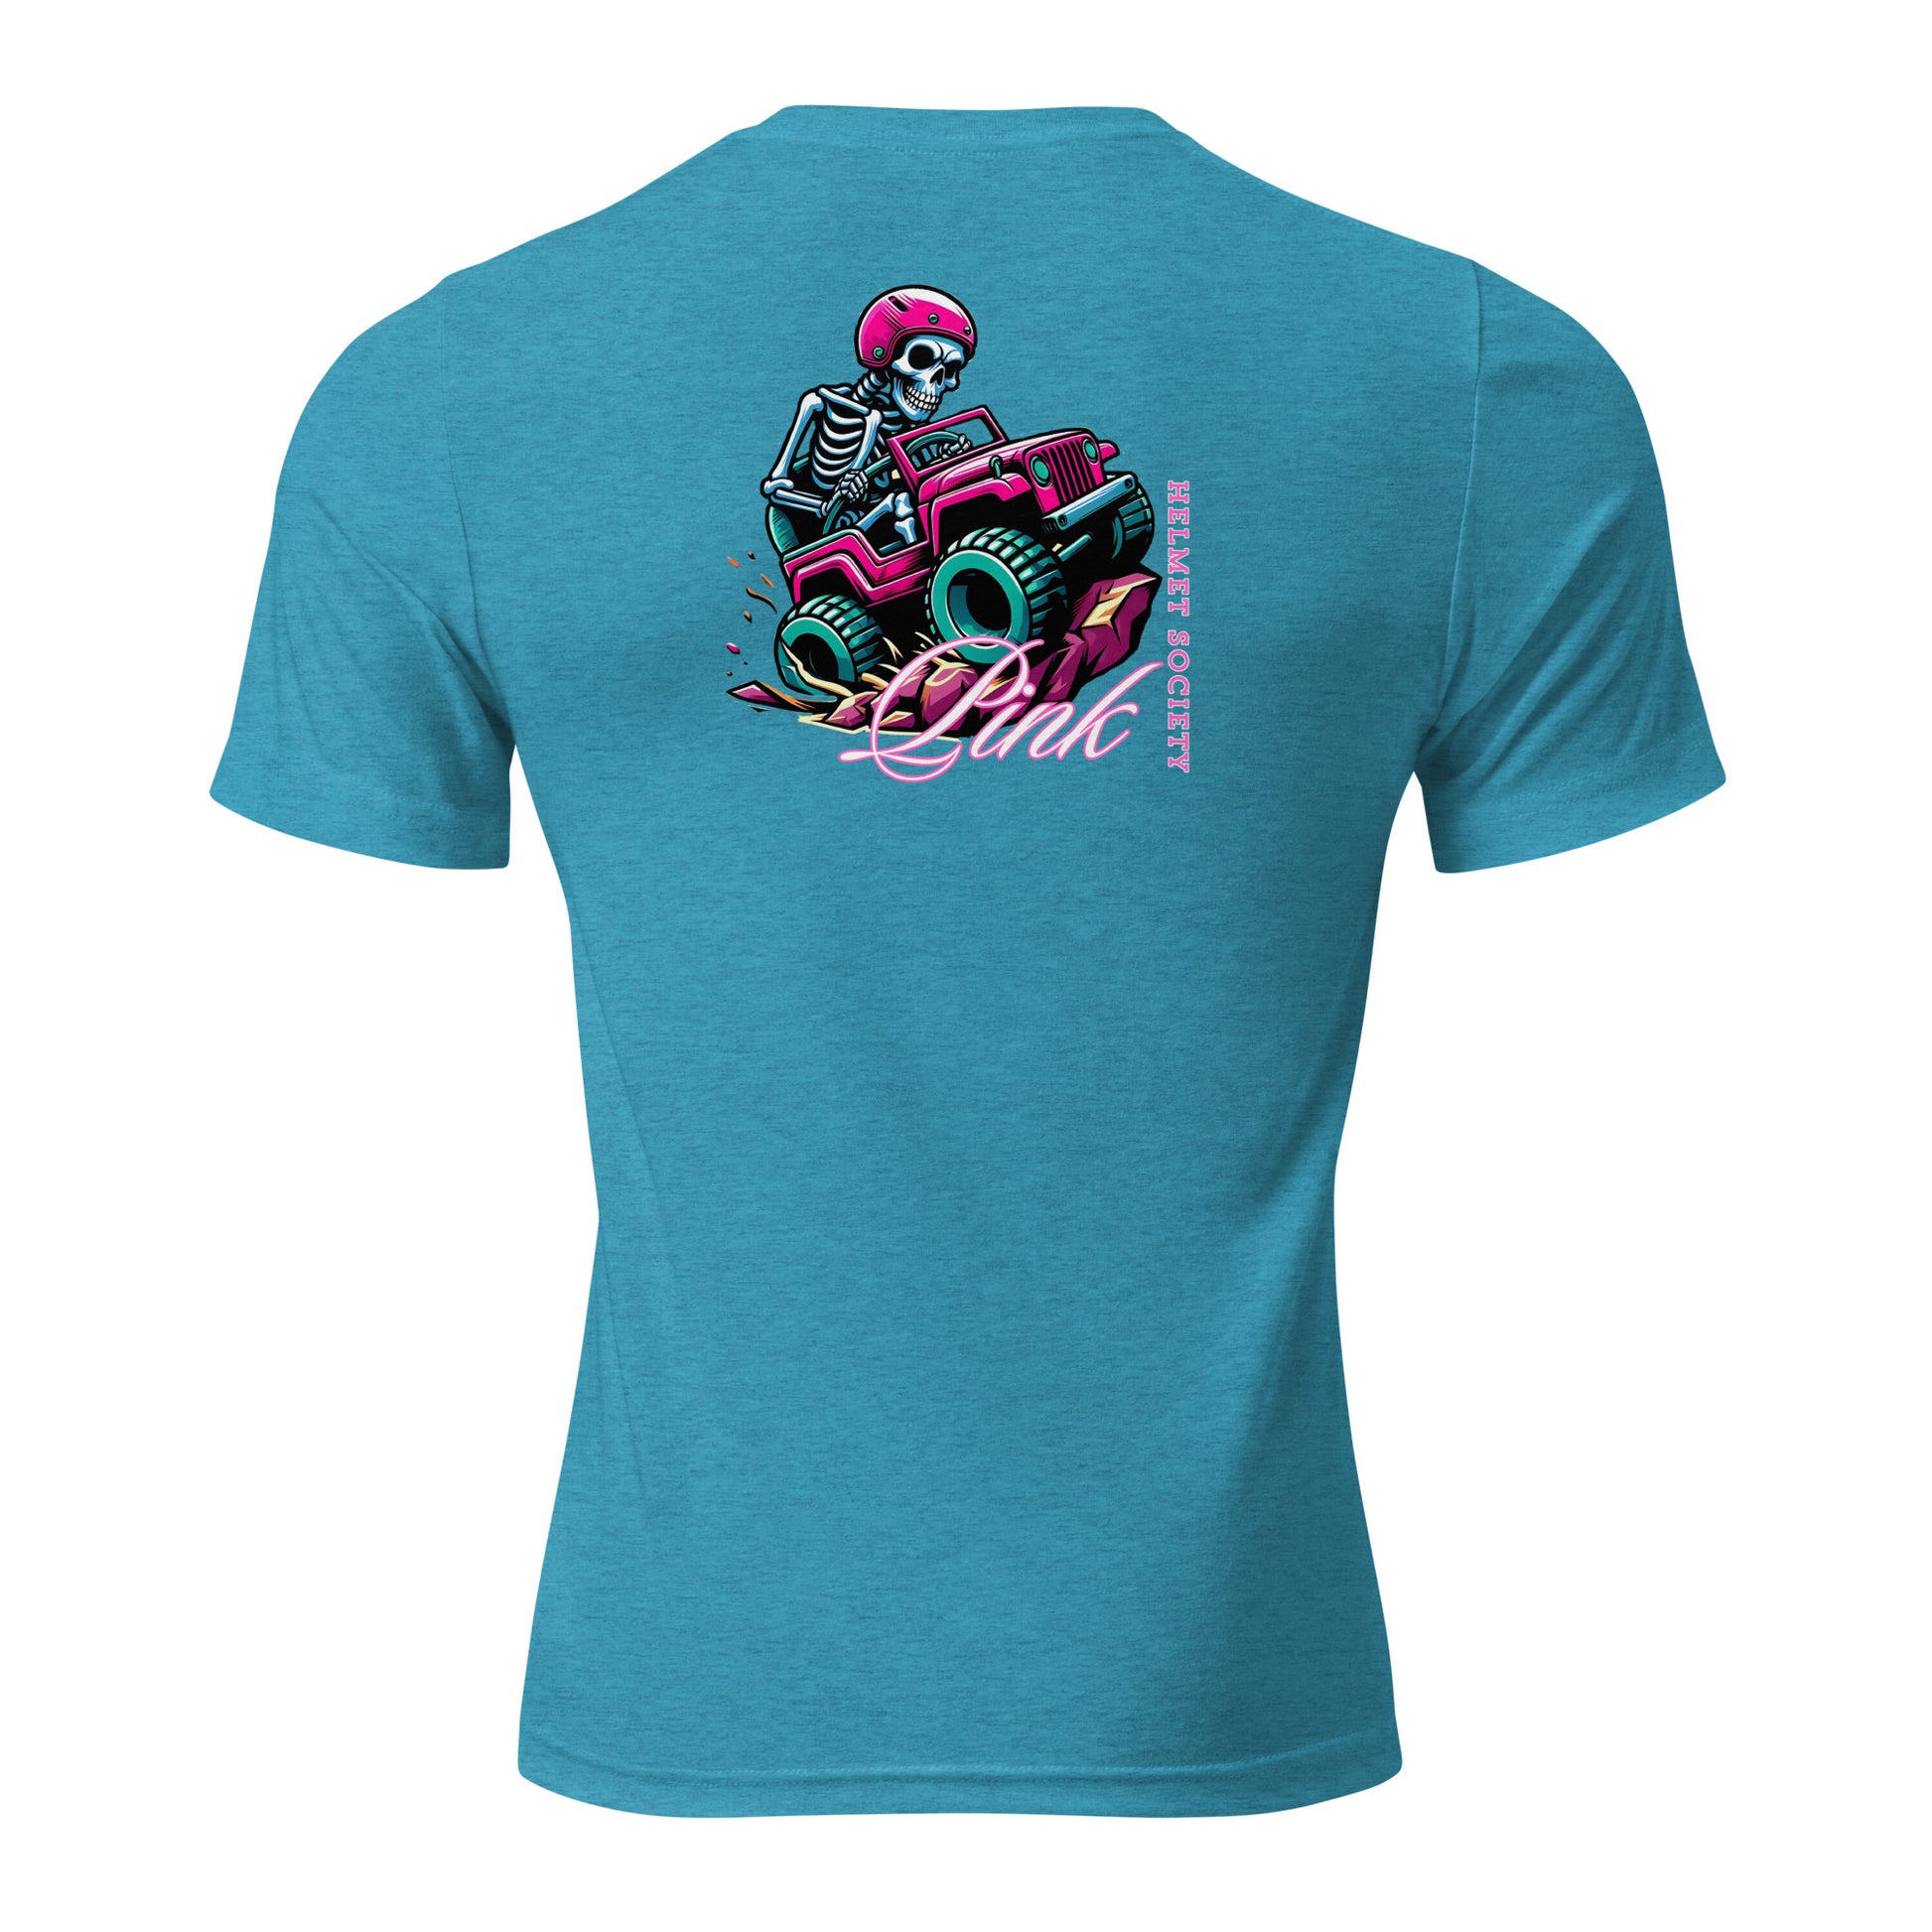 a blue shirt with a skeleton riding a pink atv